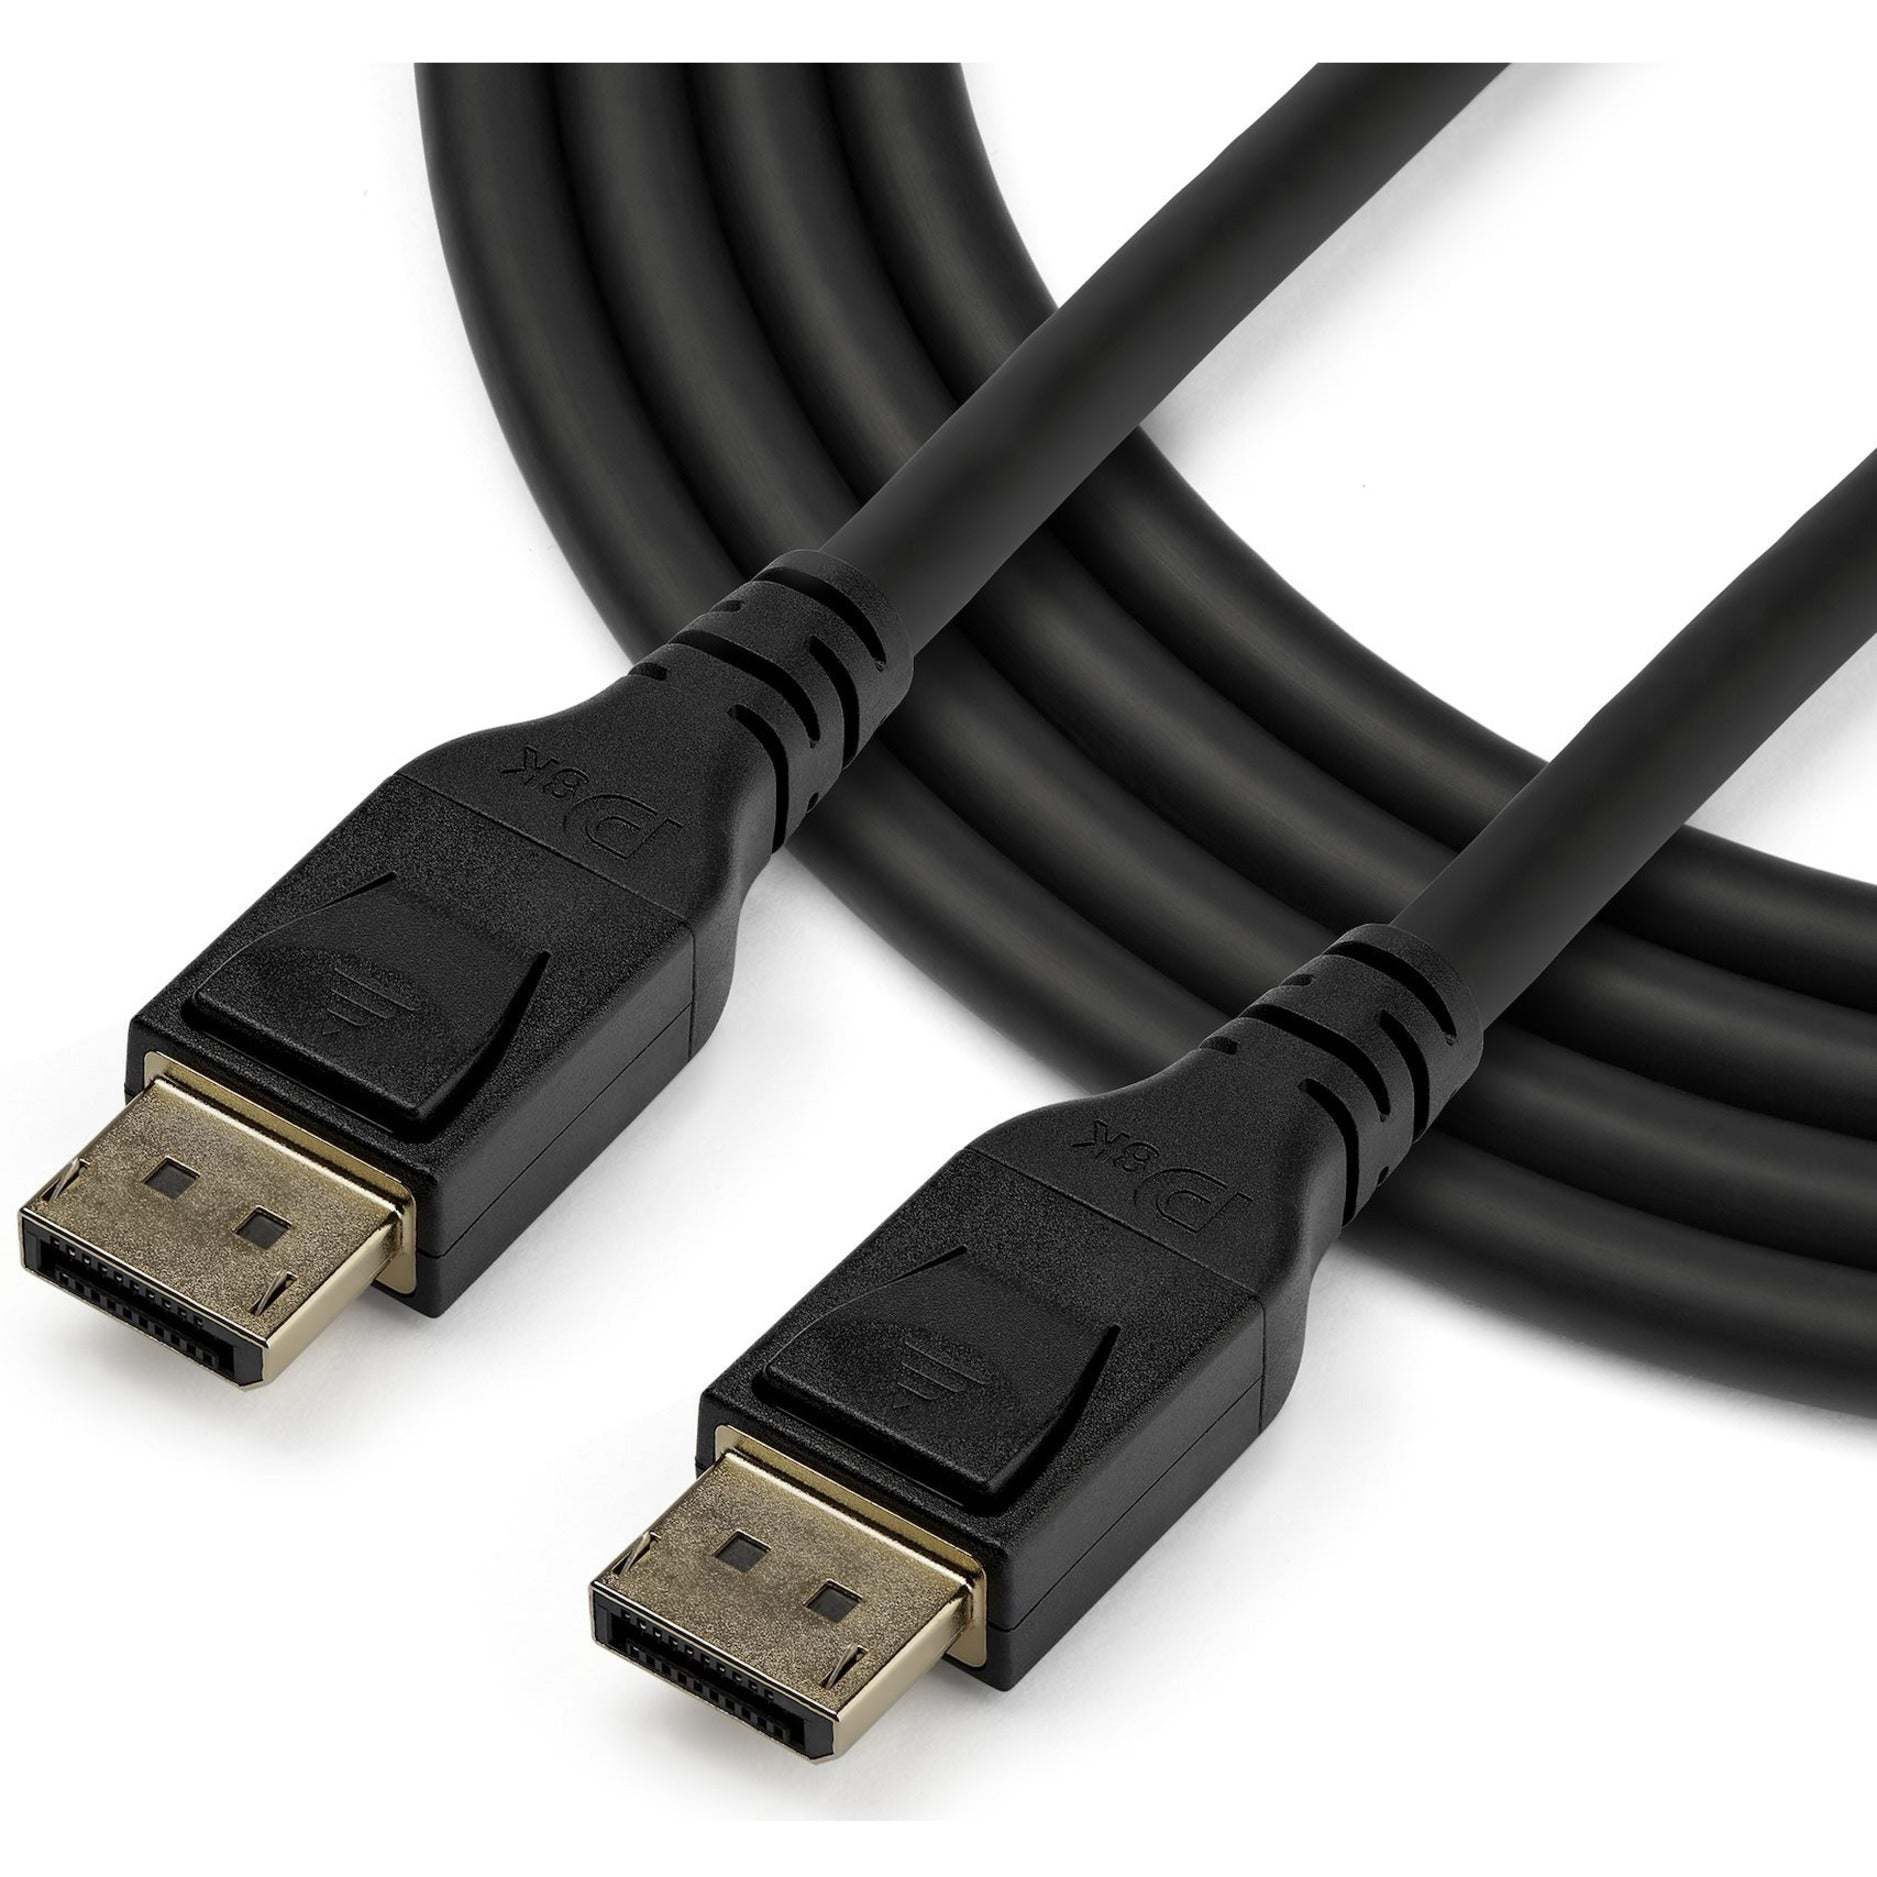 StarTech.com DP14MM3M 9.8 ft. (3 m) DisplayPort 1.4 Cable - VESA Certified, Supports 8K@60Hz, HDR, Latching Connectors